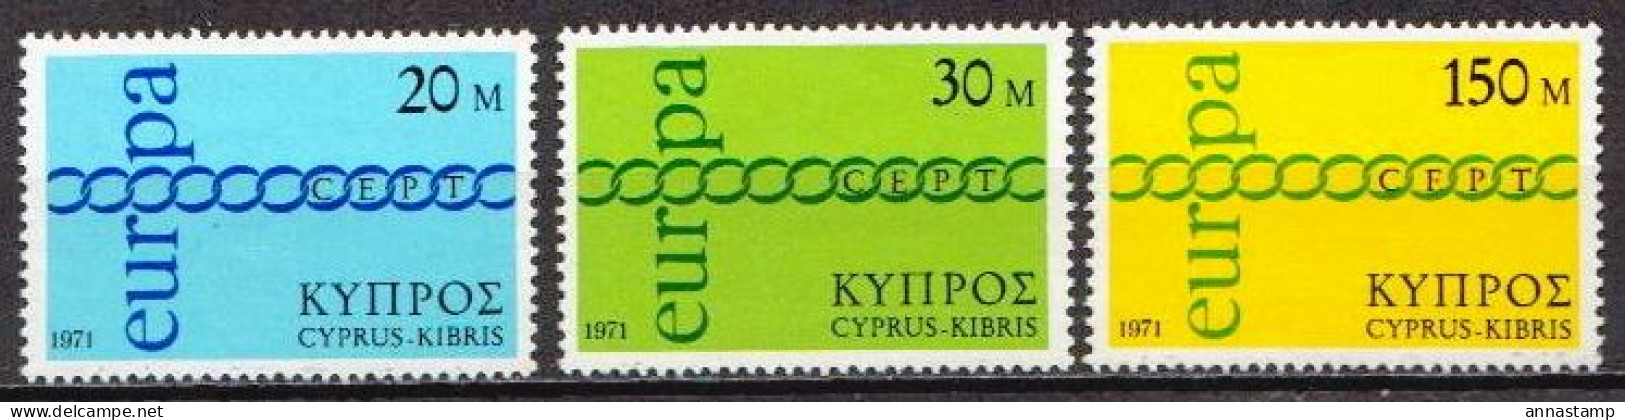 Cyprus MNH Set - 1971